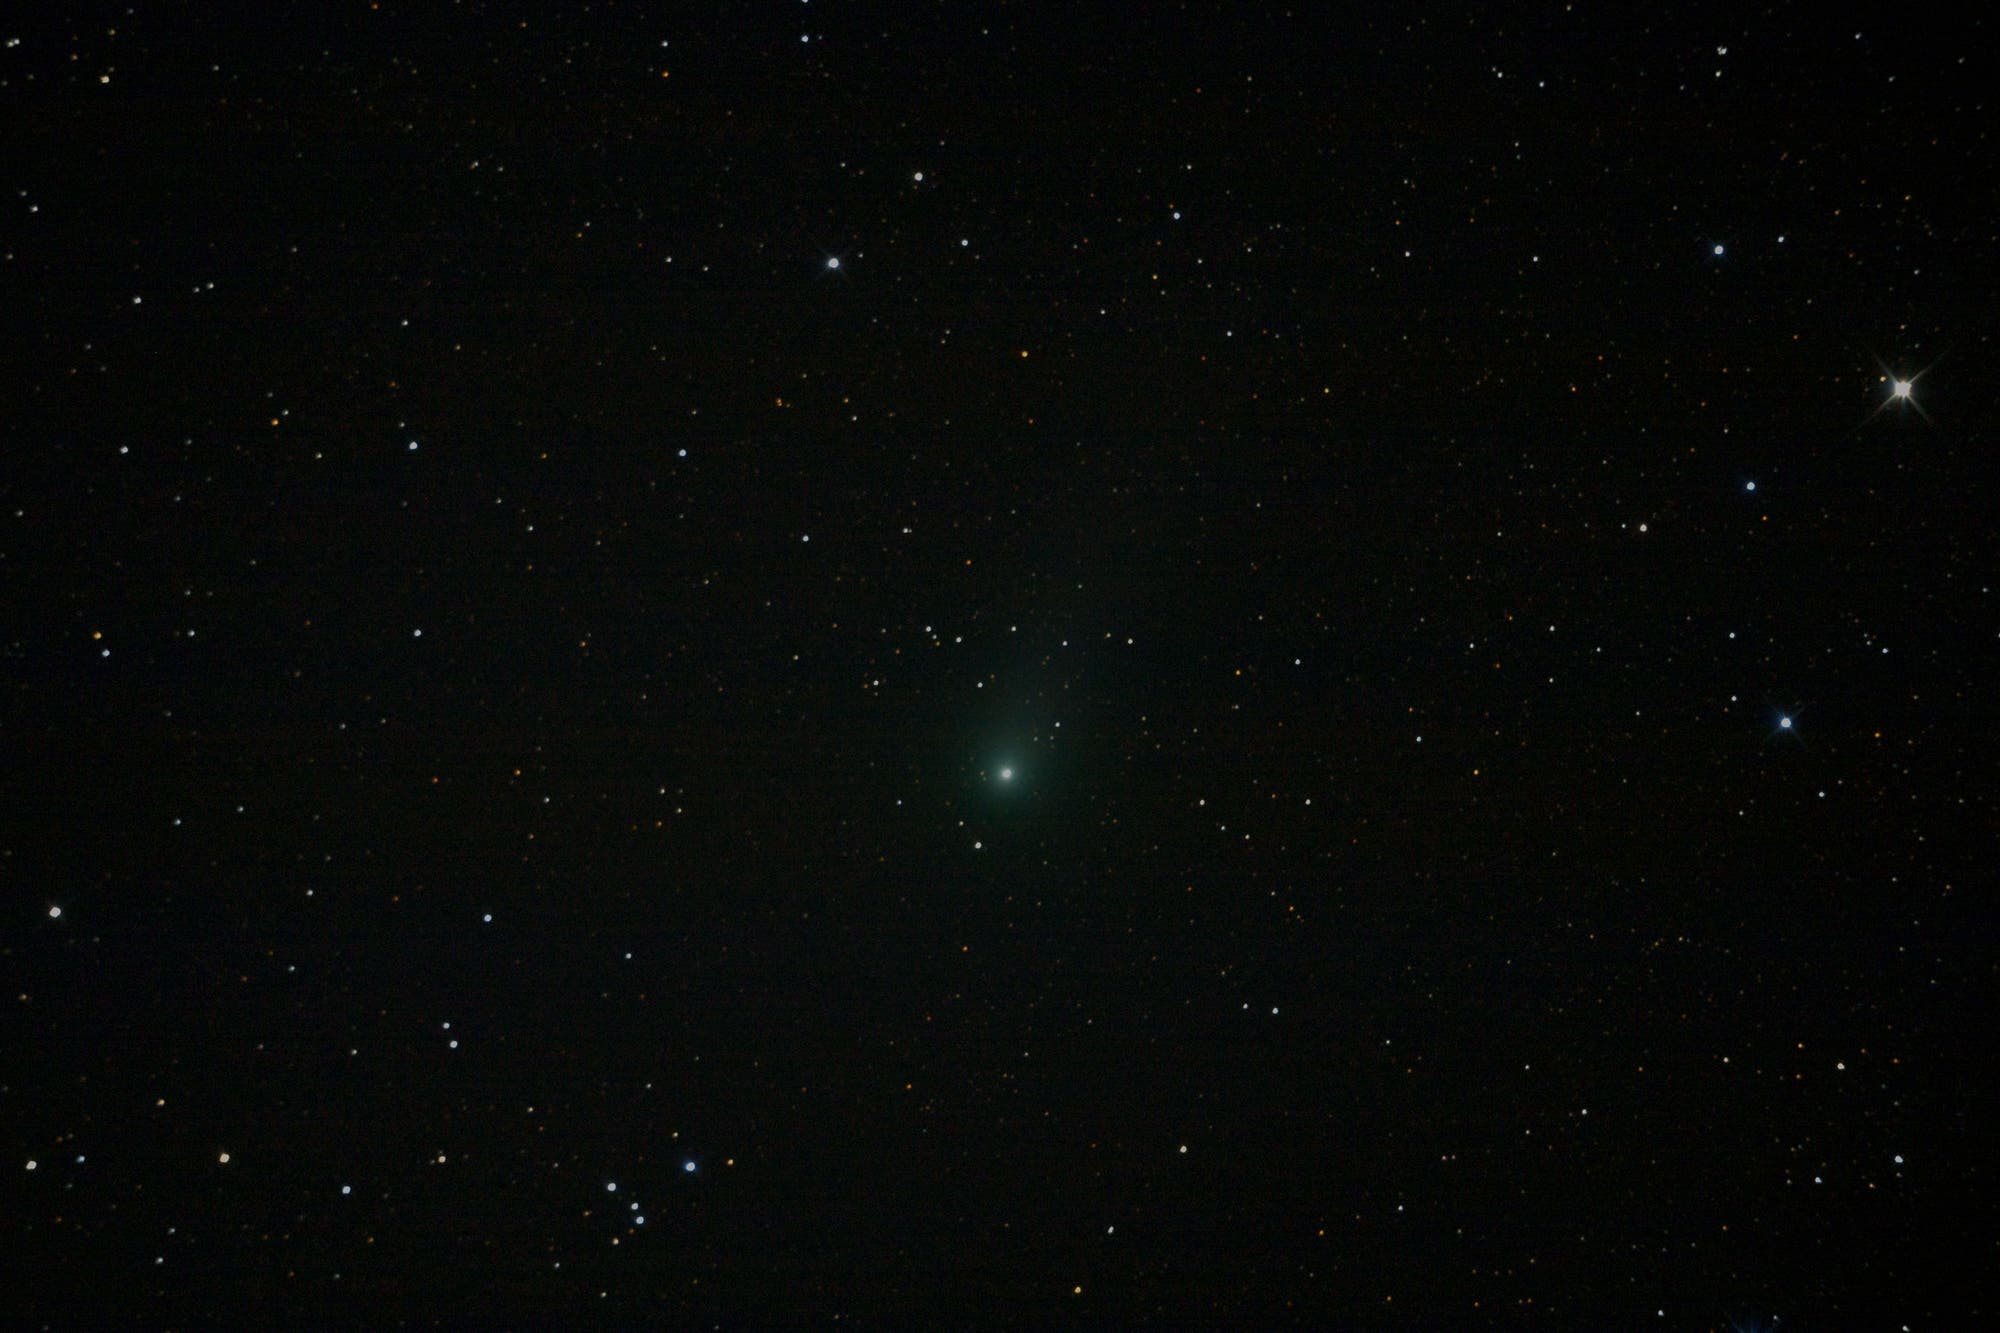 Komet C2009 P1 Garradd